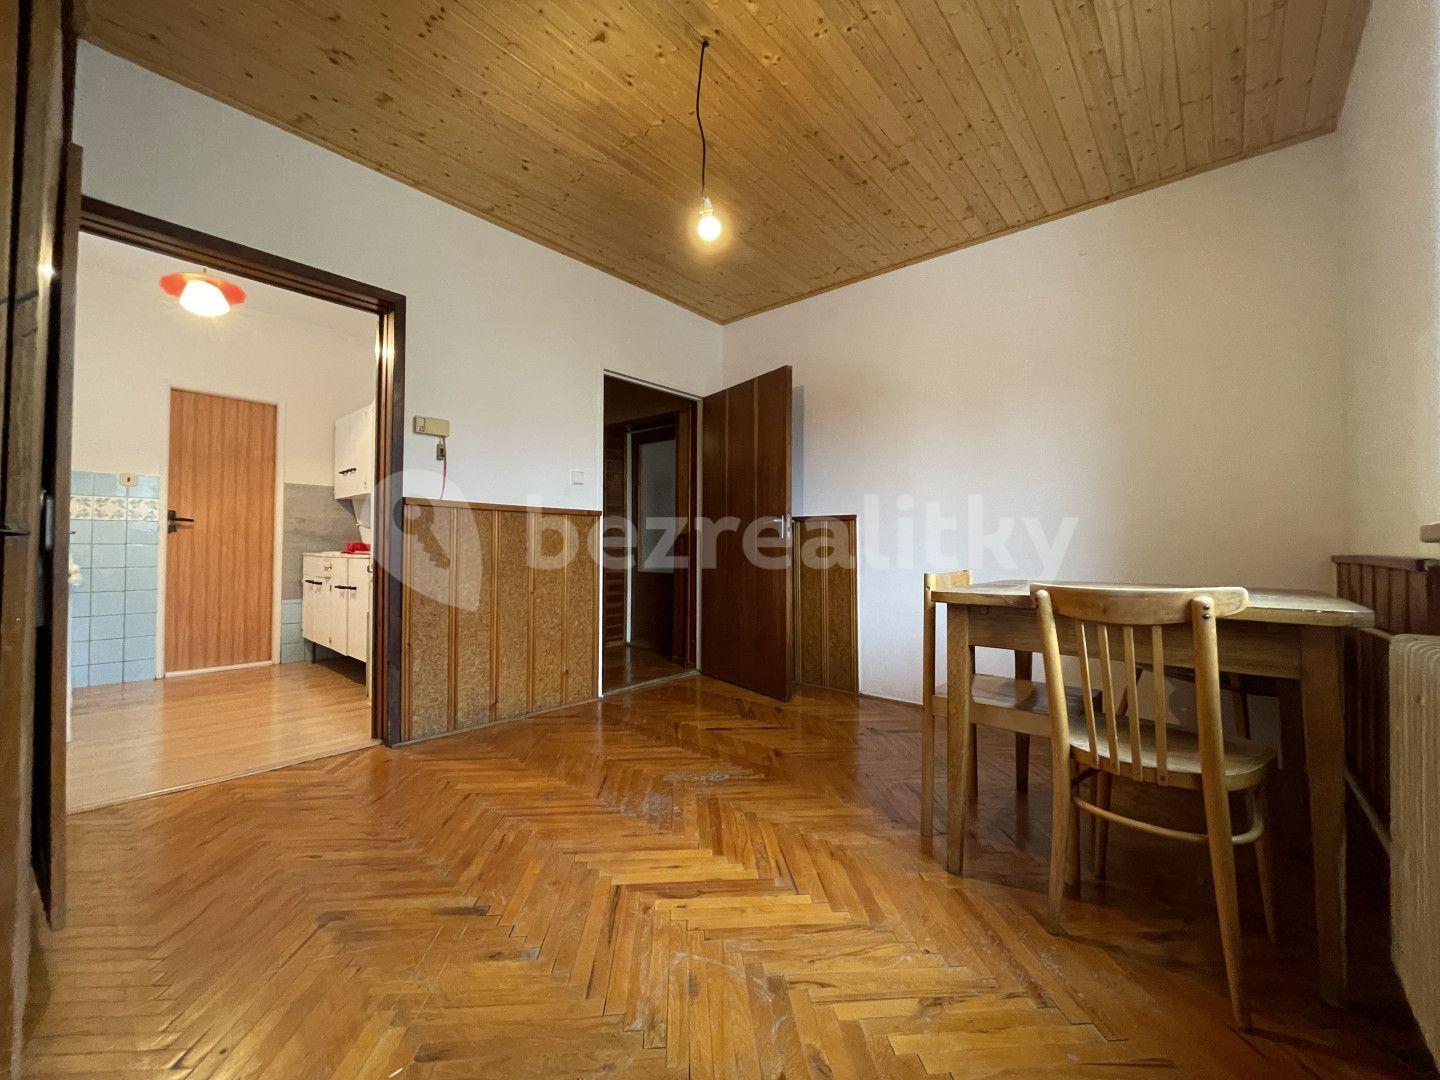 Prodej domu 210 m², pozemek 800 m², Cihelna II, Konice, Olomoucký kraj